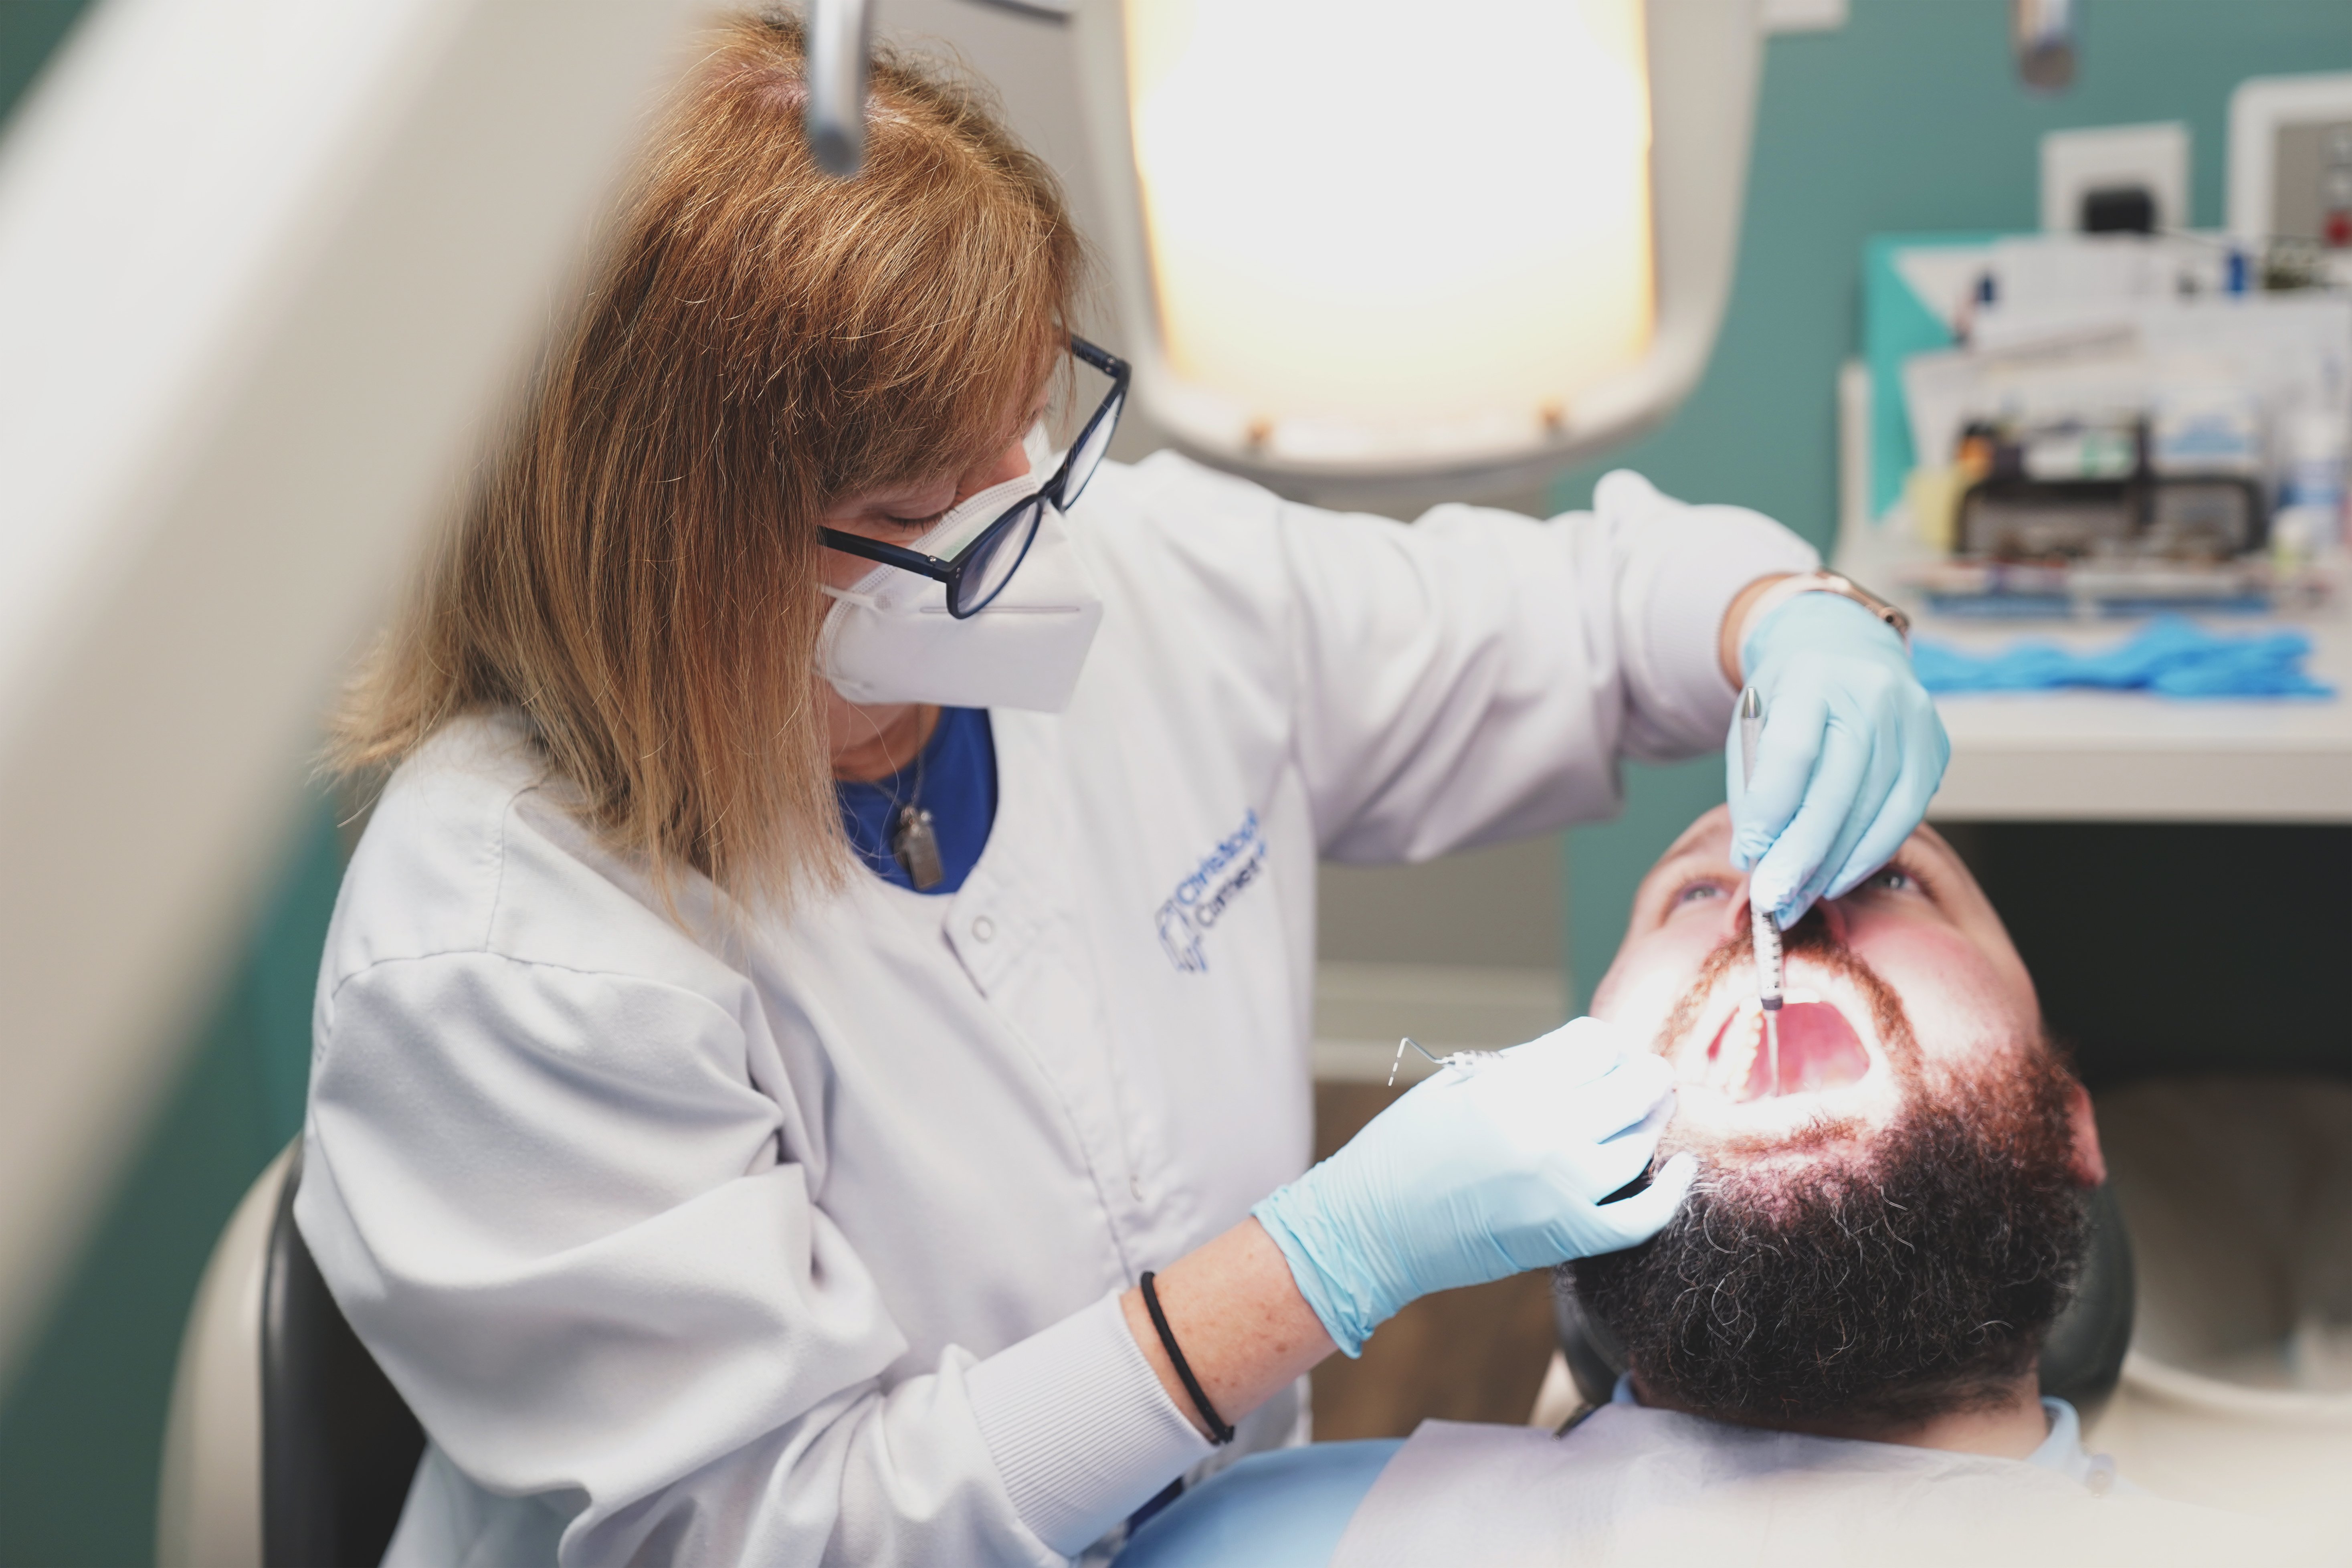 4 things your dental insurance claim needs for reimbursement